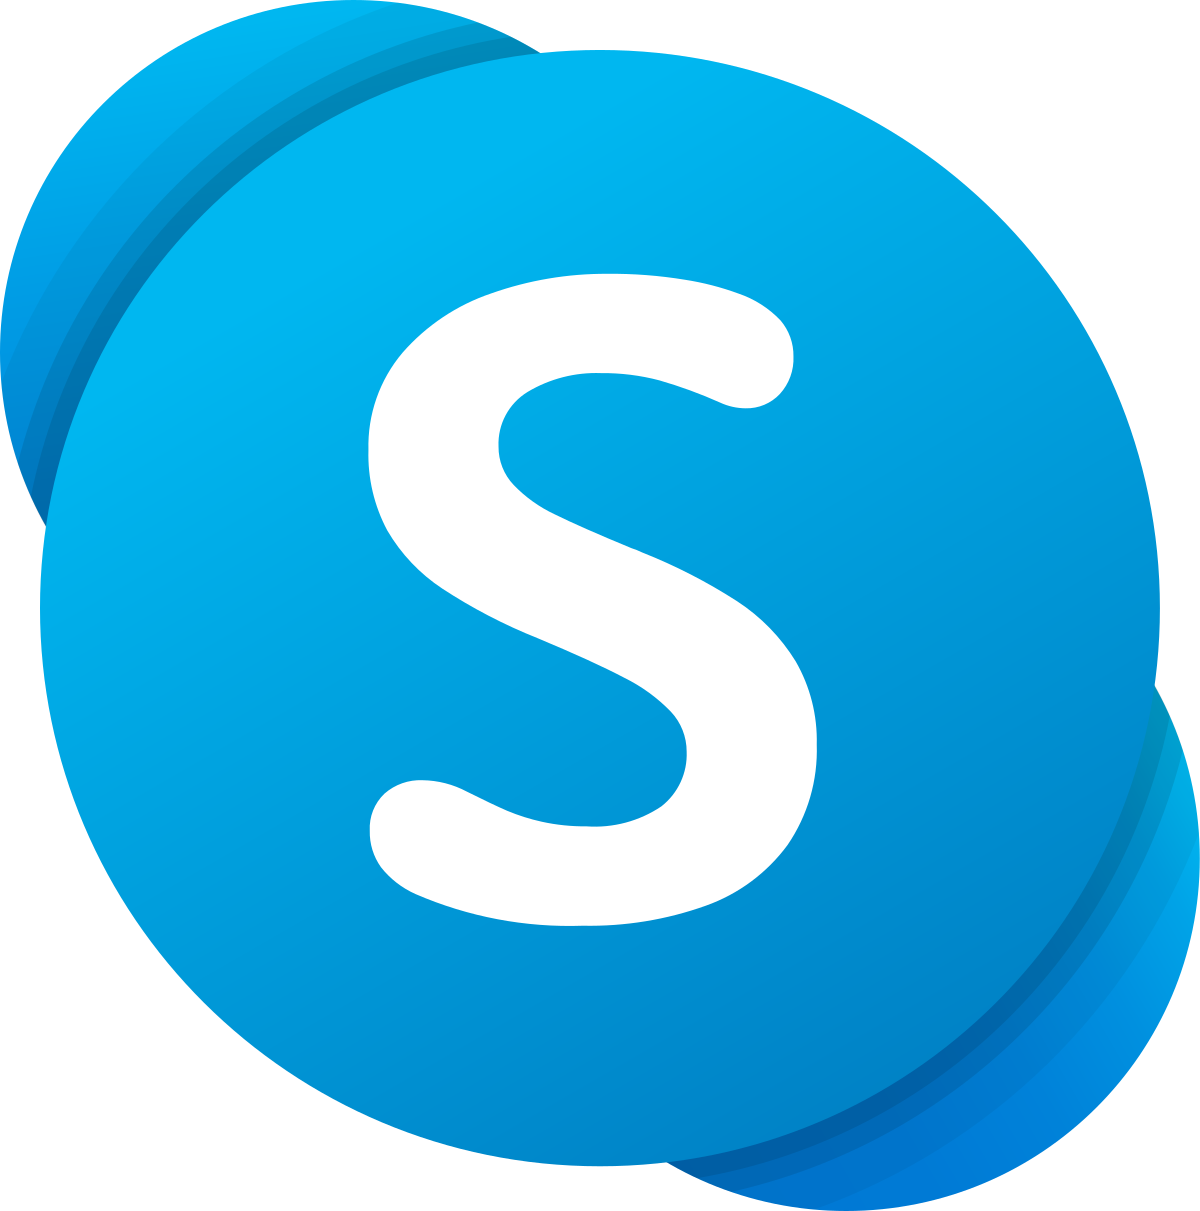 https://upload.wikimedia.org/wikipedia/commons/thumb/6/60/Skype_logo_%282019%E2%80%93present%29.svg/1200px-Skype_logo_%282019%E2%80%93present%29.svg.png